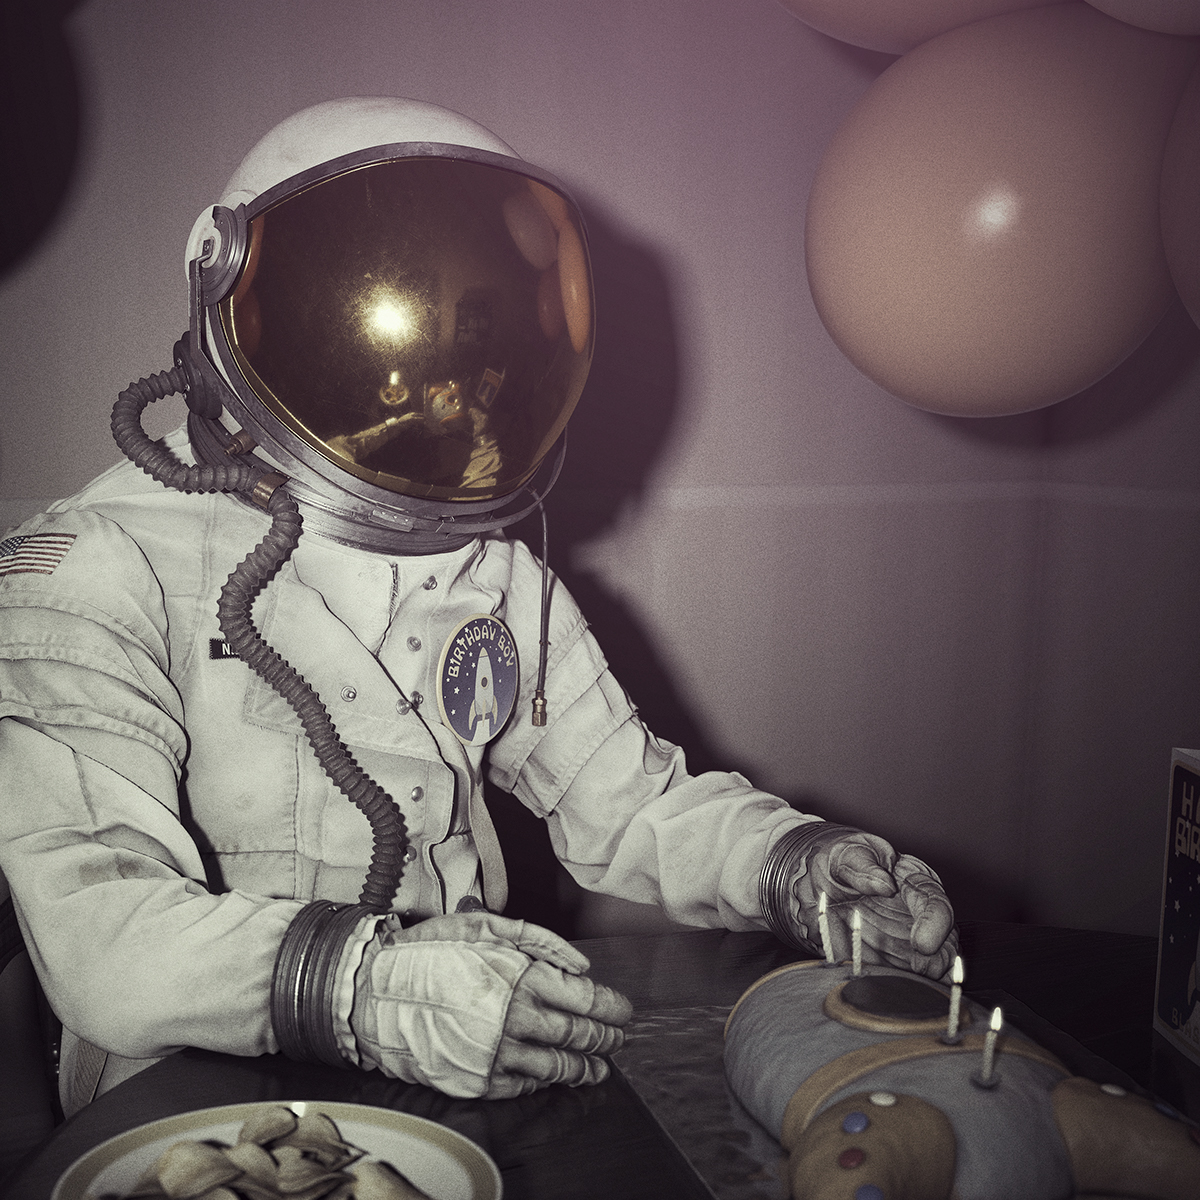 Space spaceman CG Character design photo realistic Digital Art.